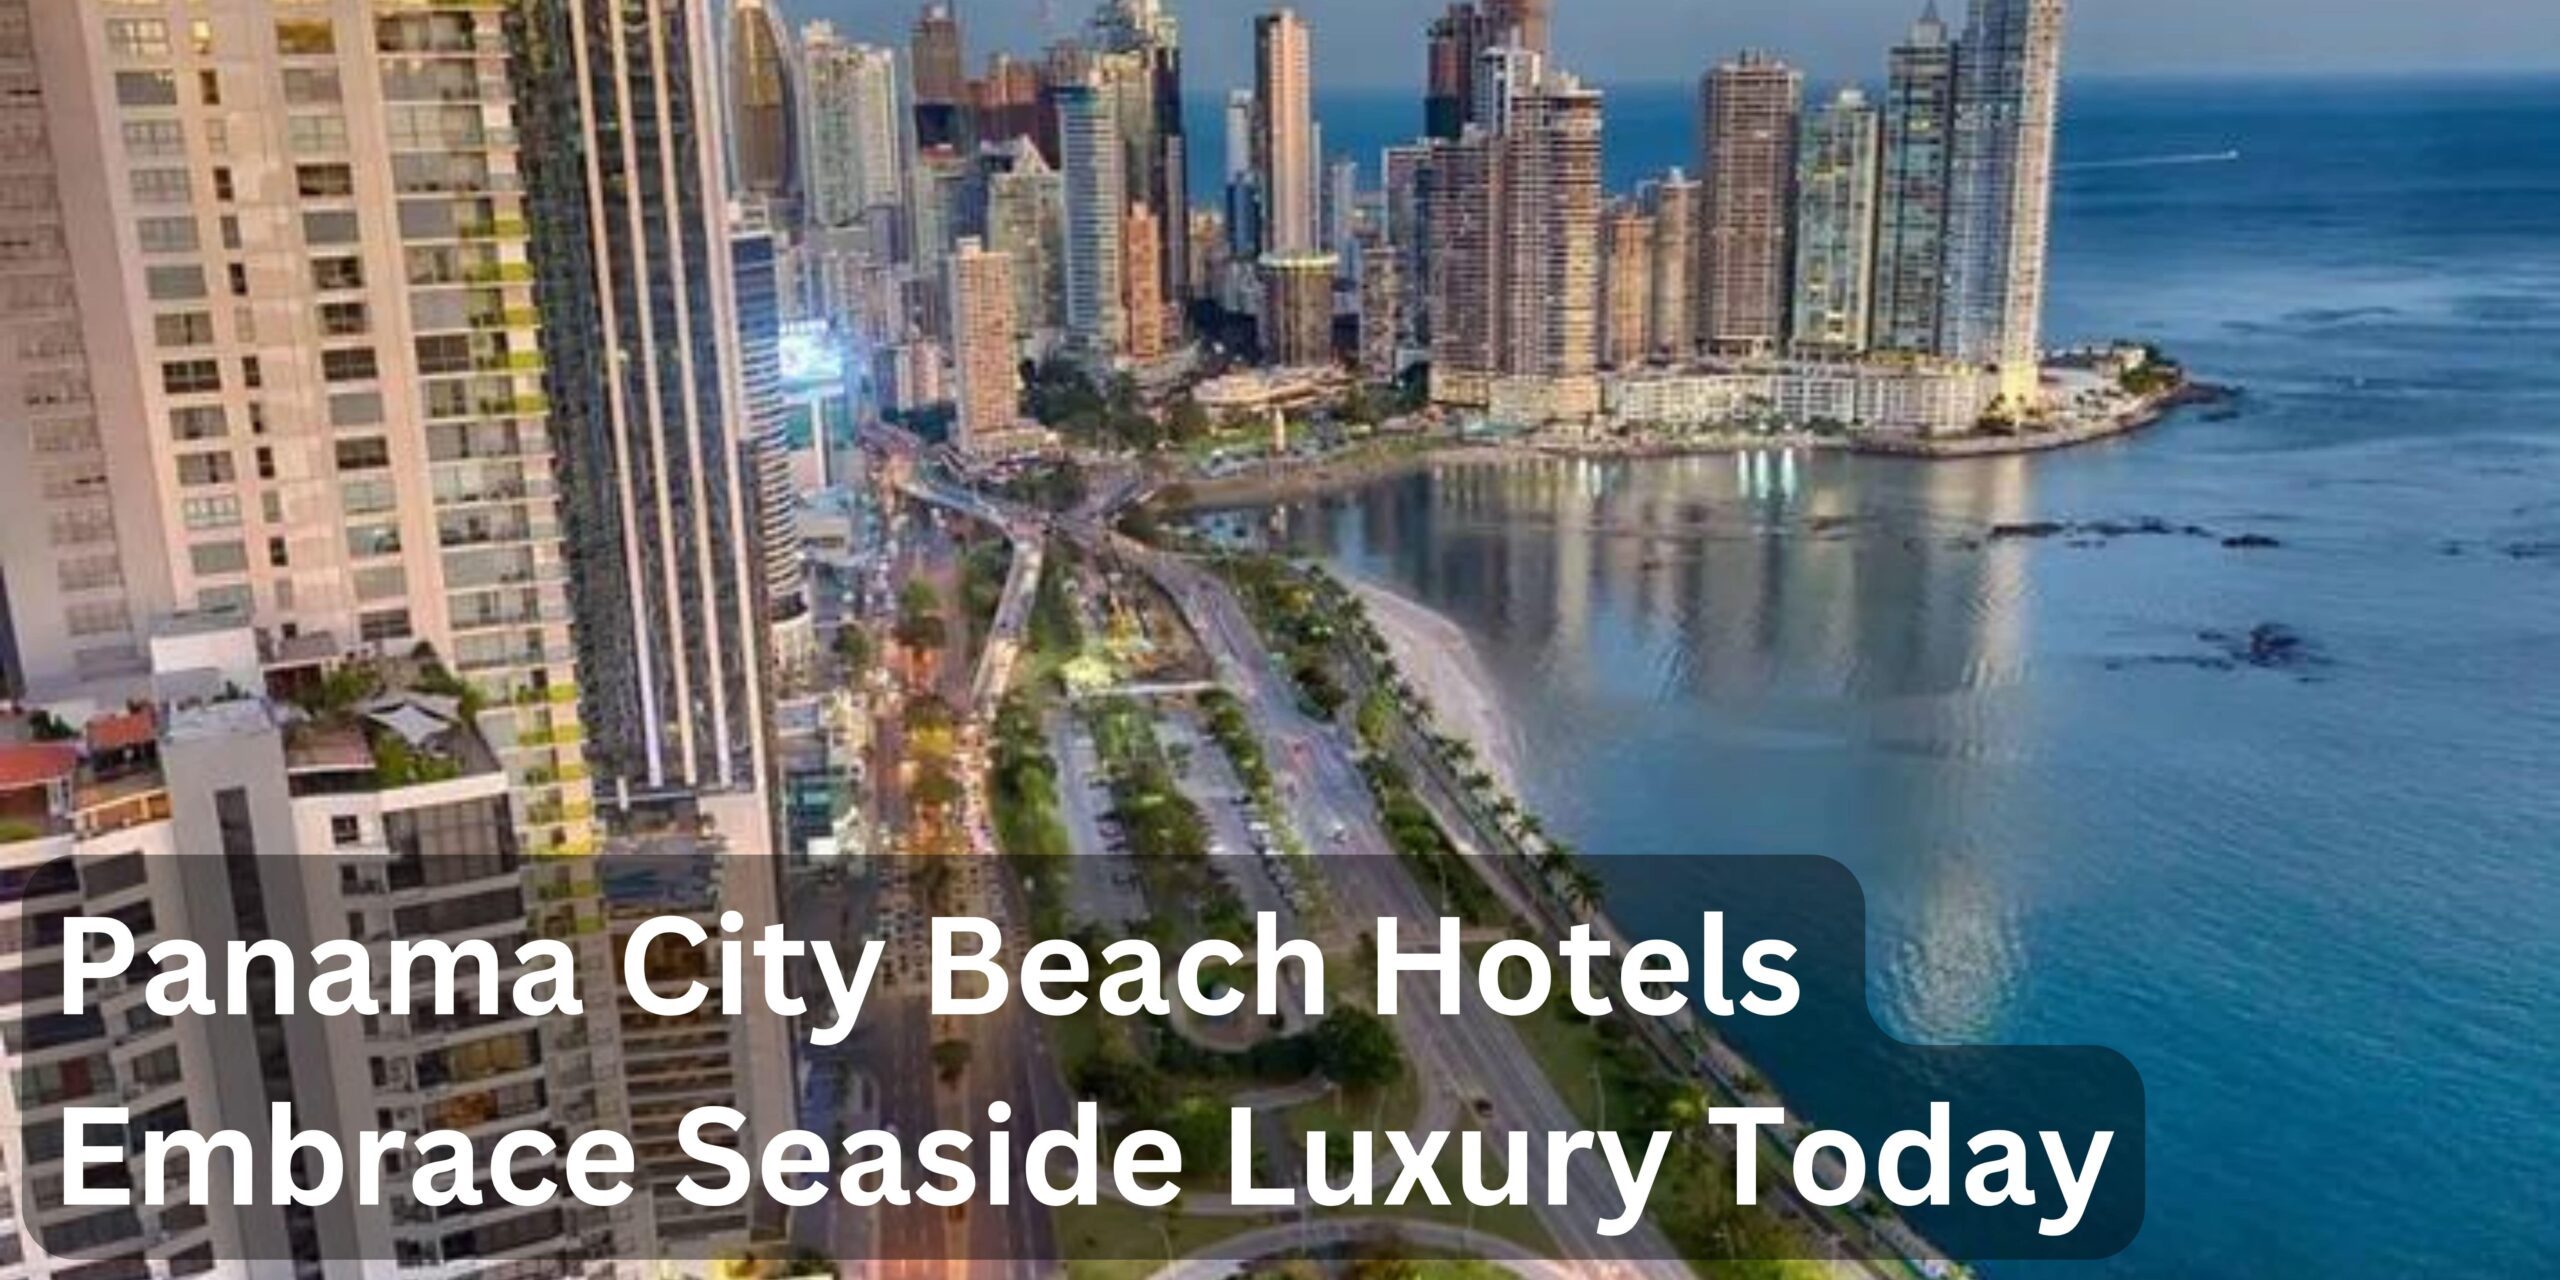 Panama City Beach Hotels Embrace Seaside Luxury Today